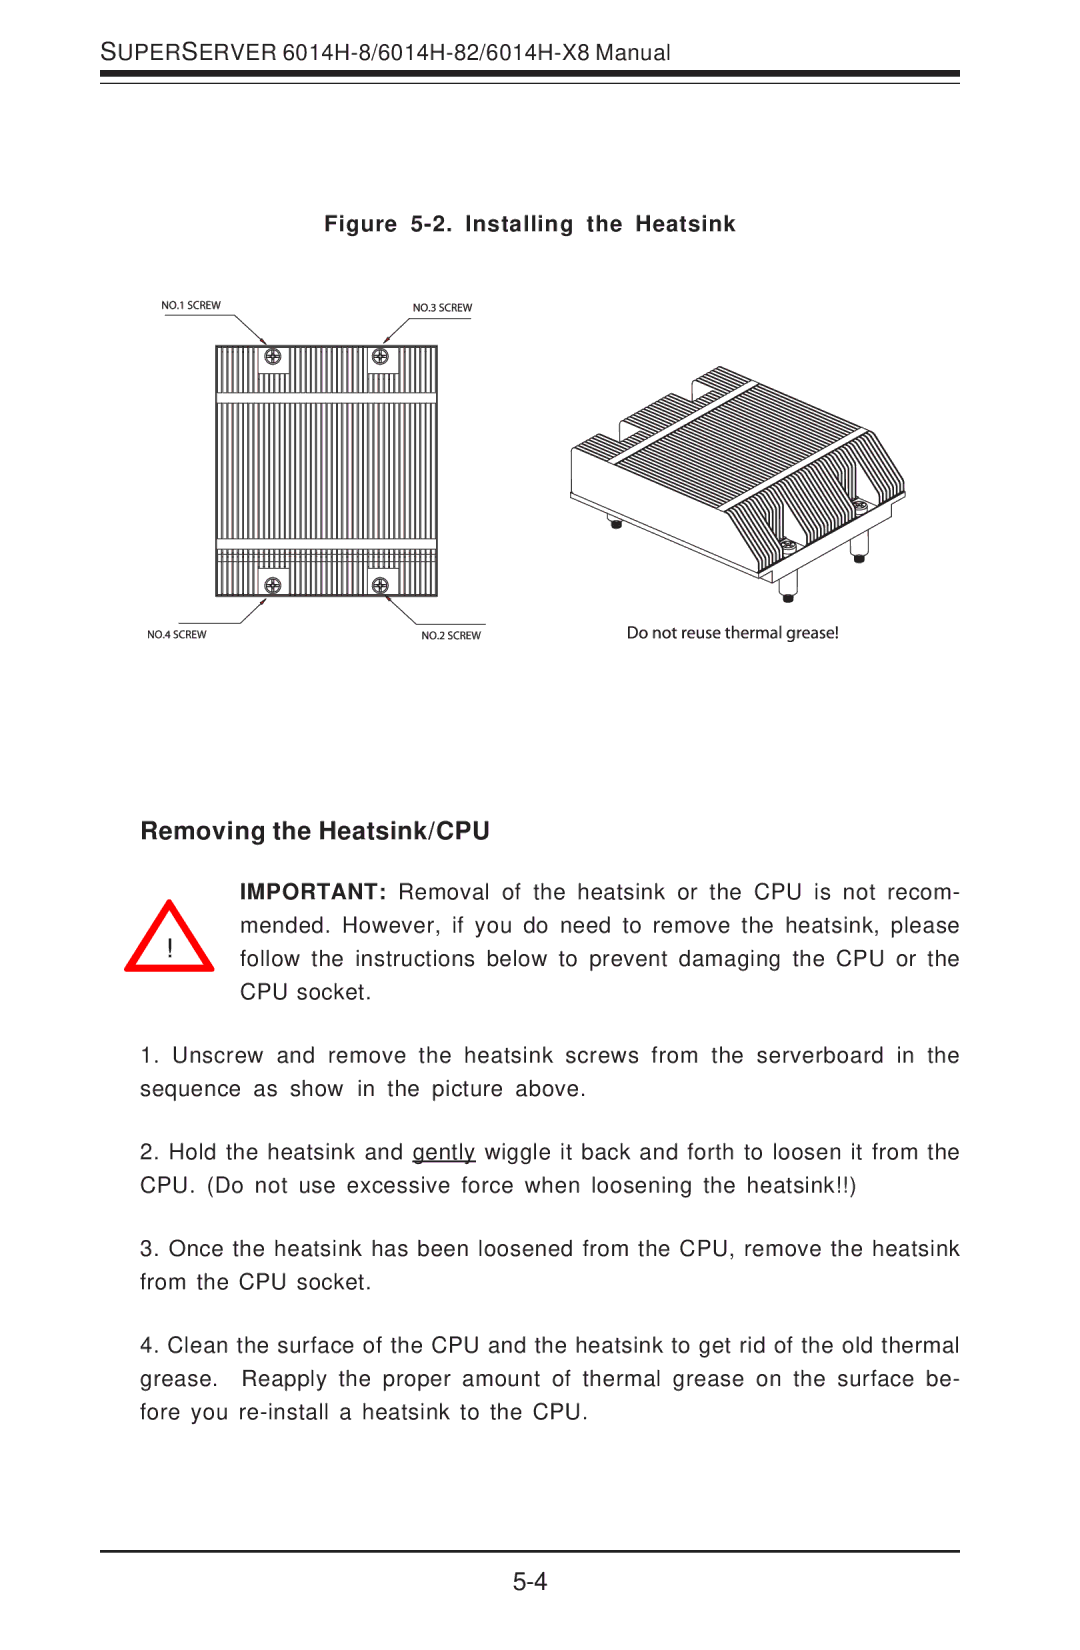 SUPER MICRO Computer 6014H-8 user manual Removing the Heatsink/CPU, Installing the Heatsink 